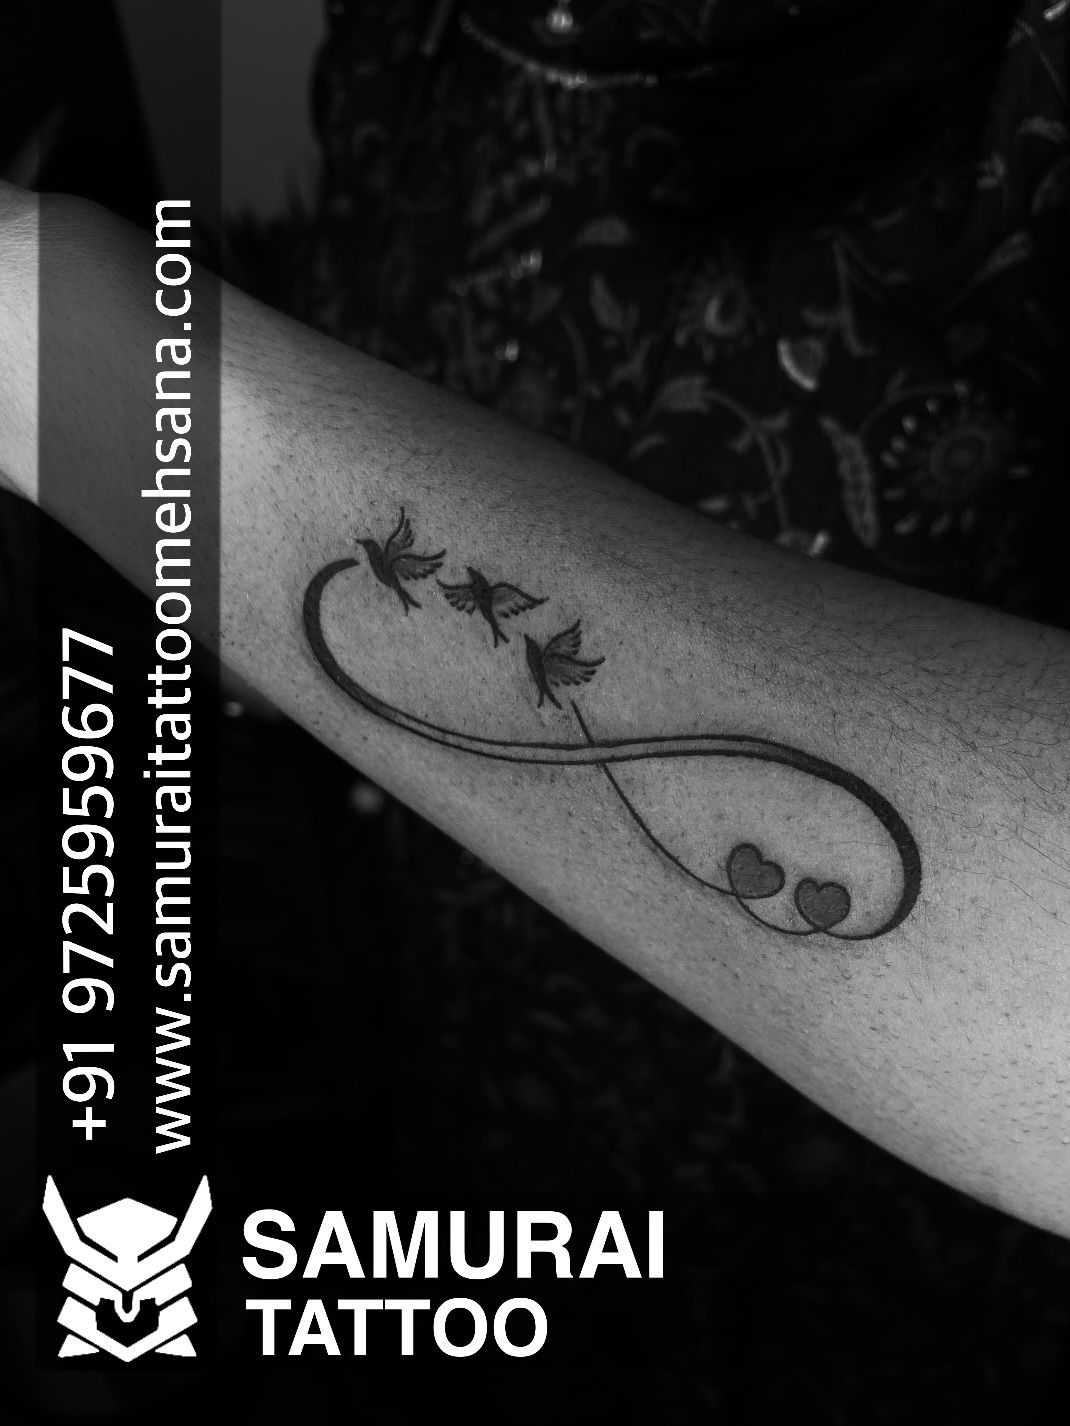 Tattoo uploaded by Vipul Chaudhary • Infinity tattoo design |Infinity tattoo  |infinity tattoos |Infinity tattoo with heart • Tattoodo